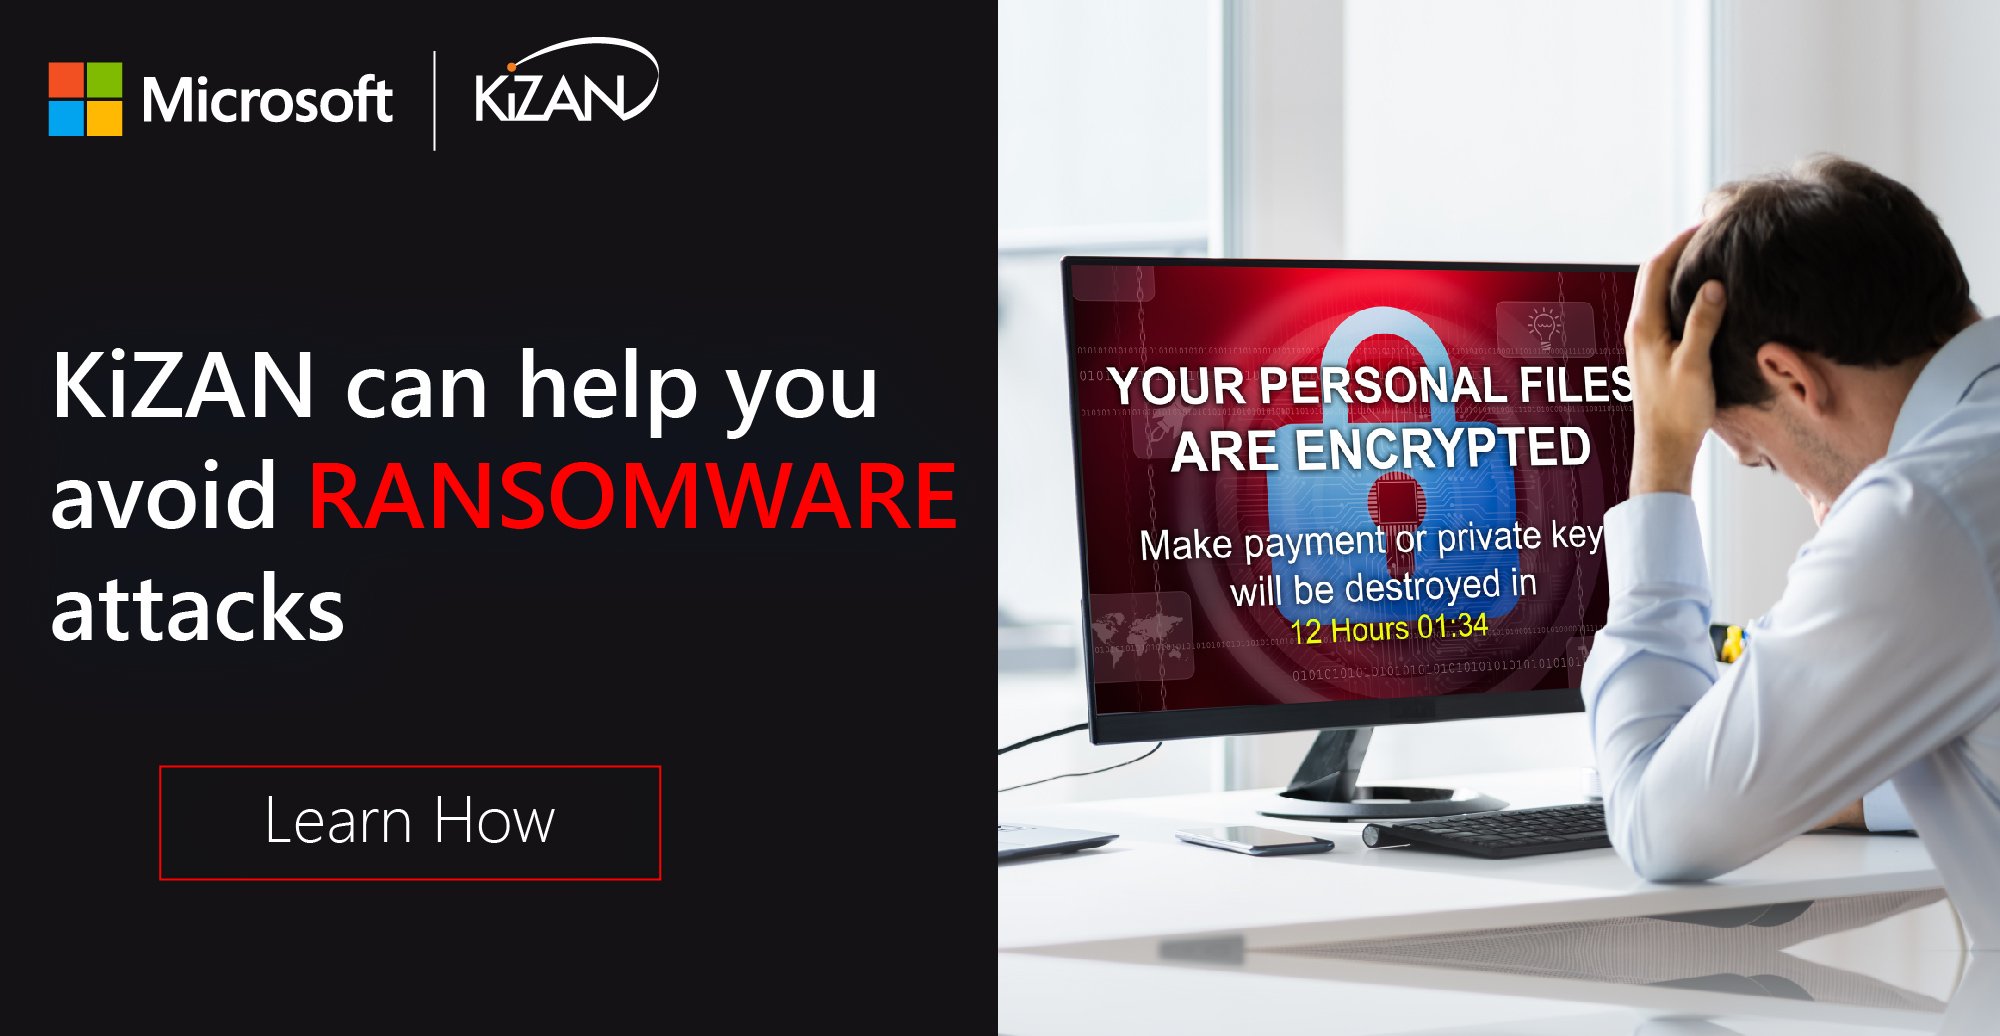 KiZAN can help you avoid ransomware attacks